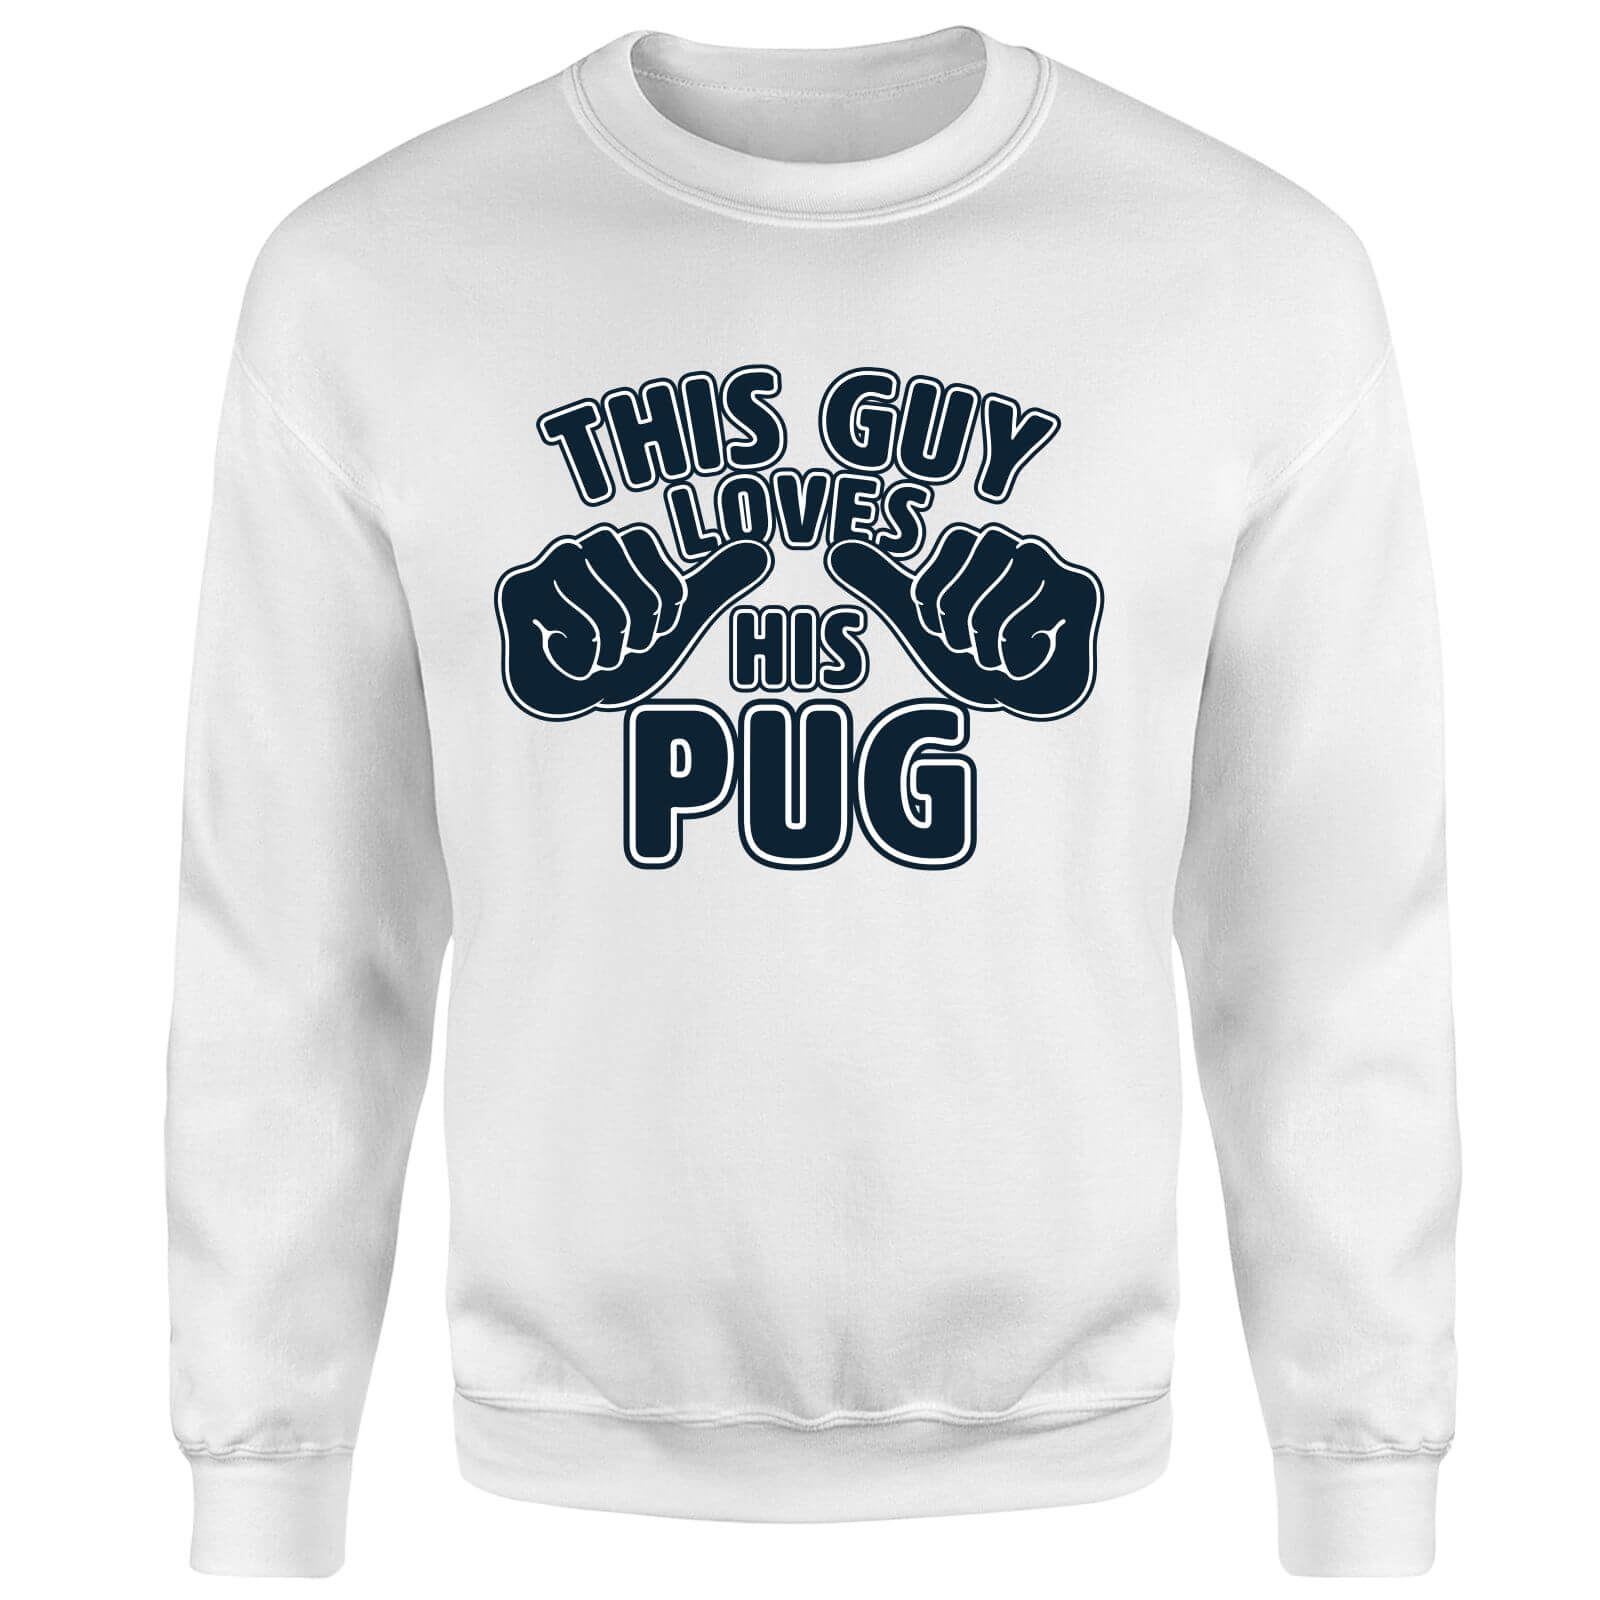 This Guy Loves His Pug Sweatshirt - White - S - White